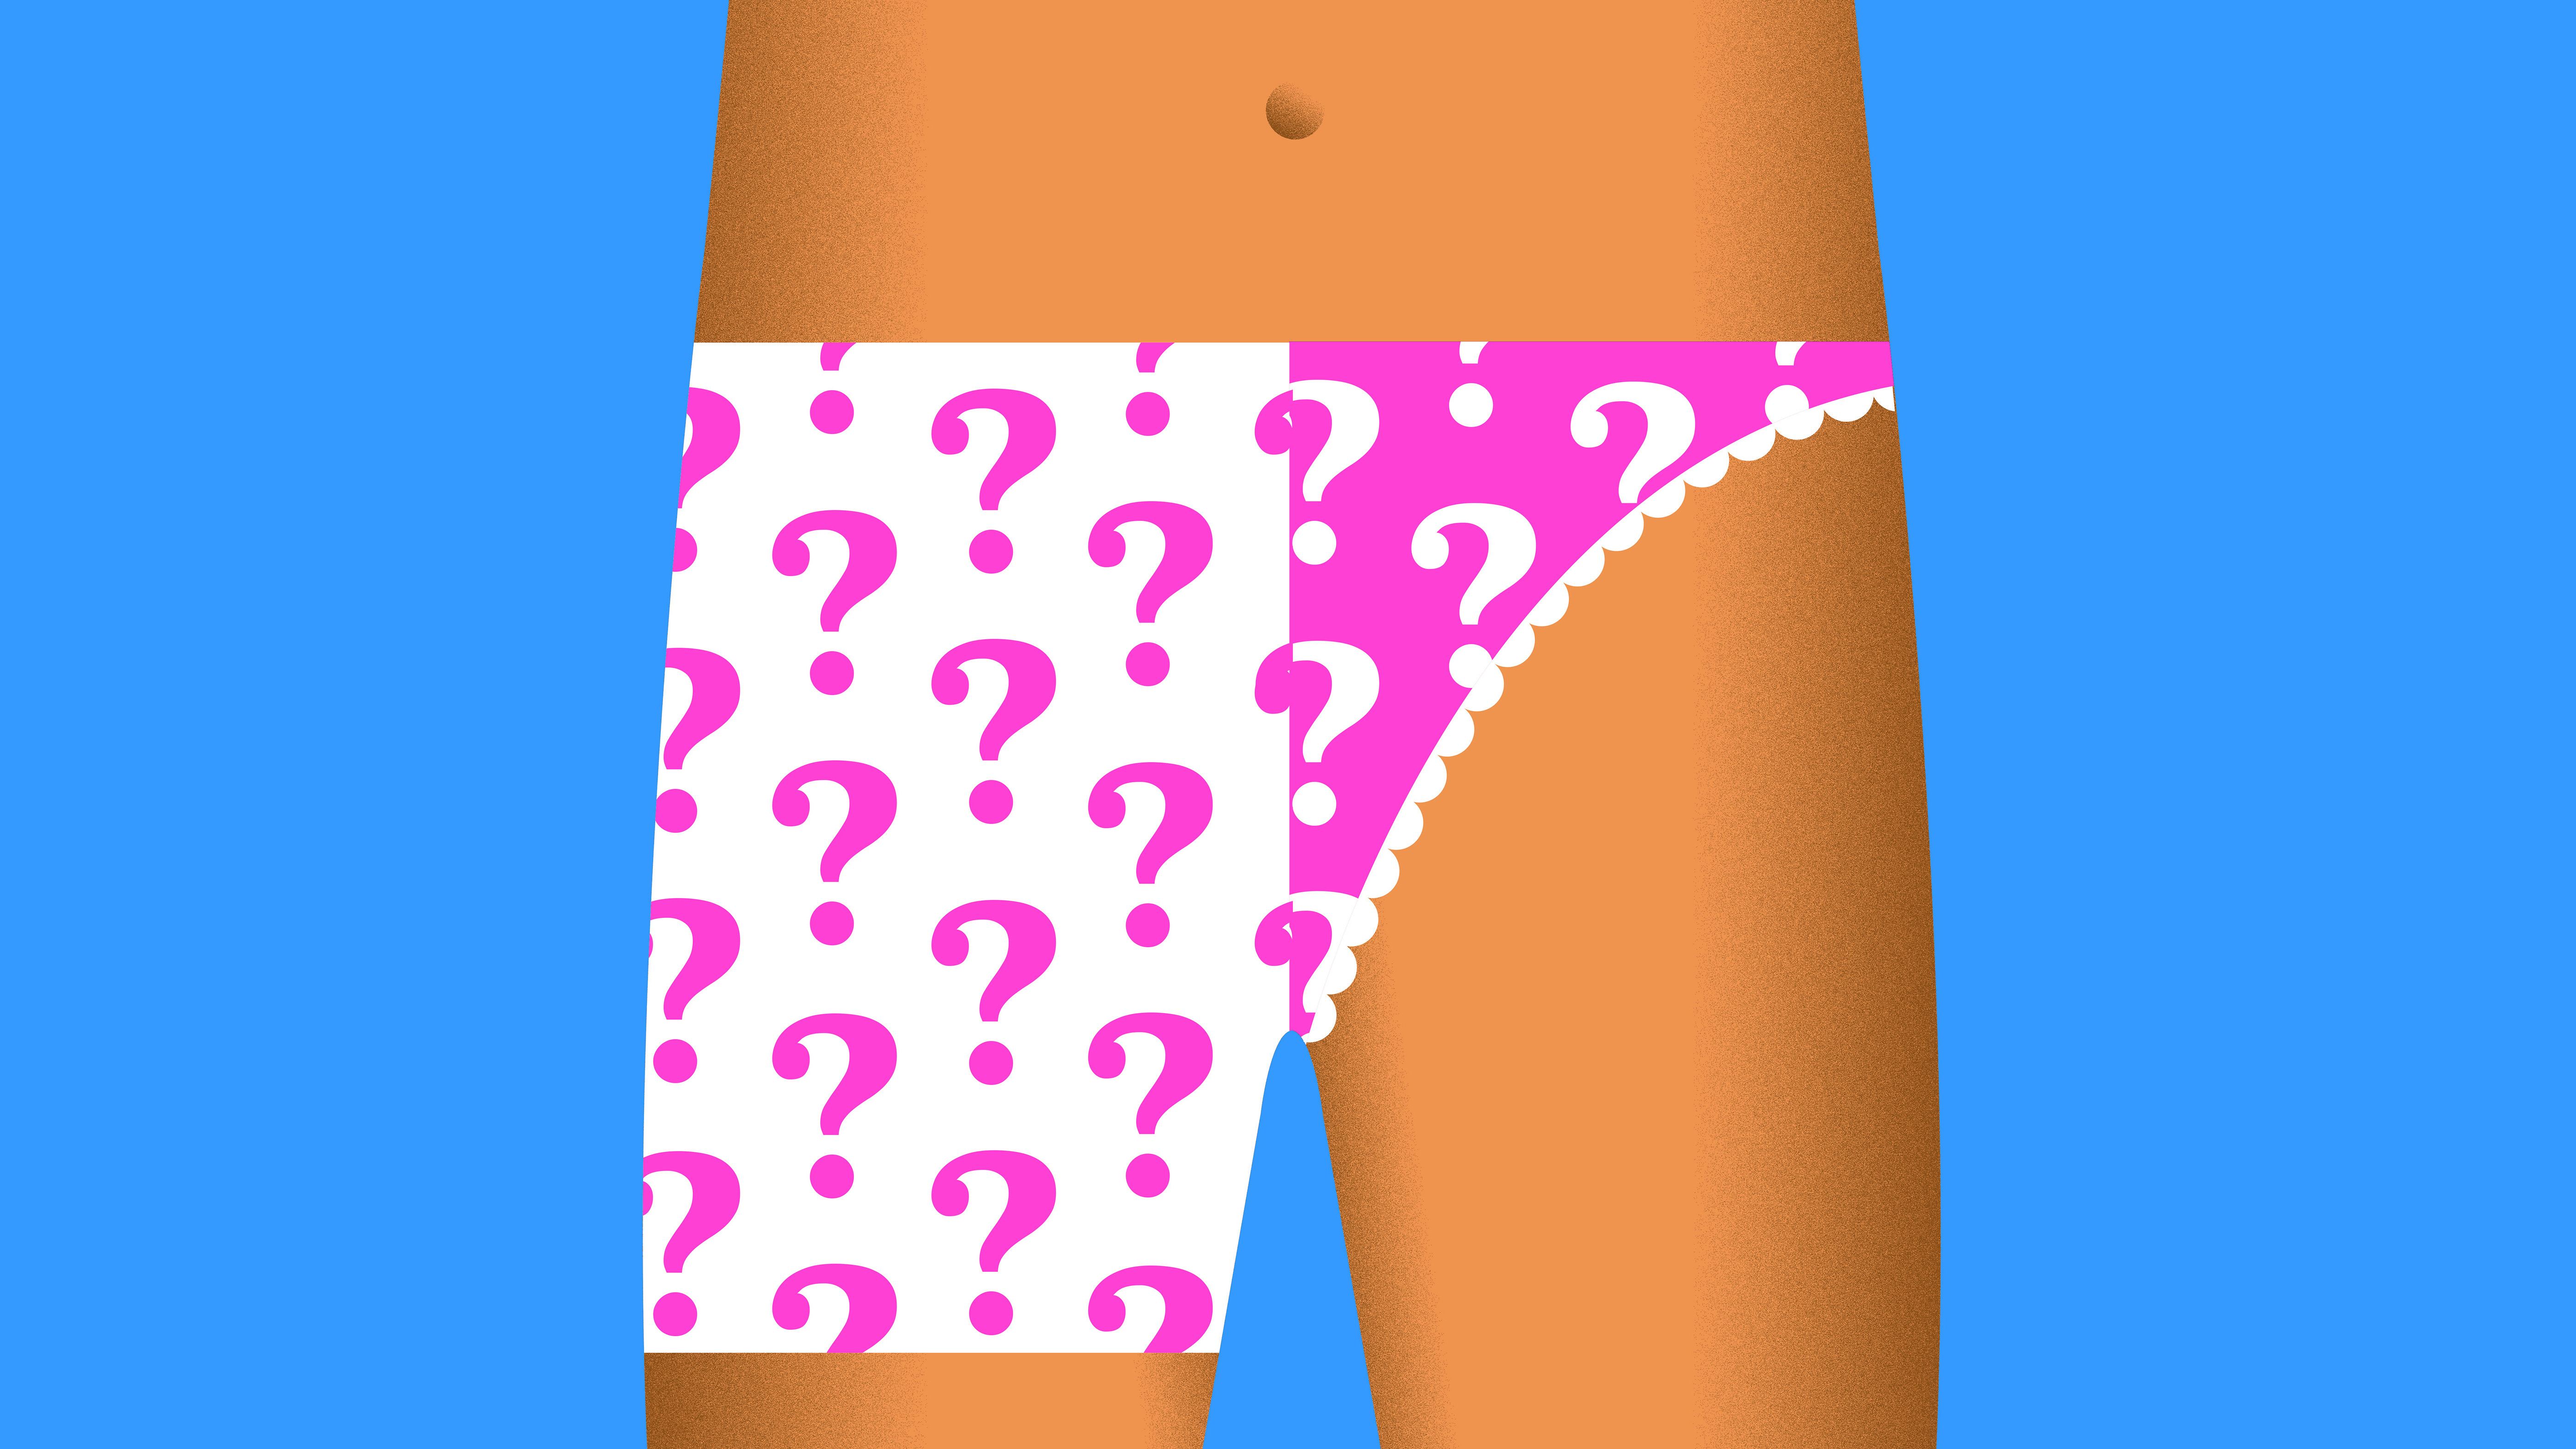 april espinal recommends men wearing panties forum pic